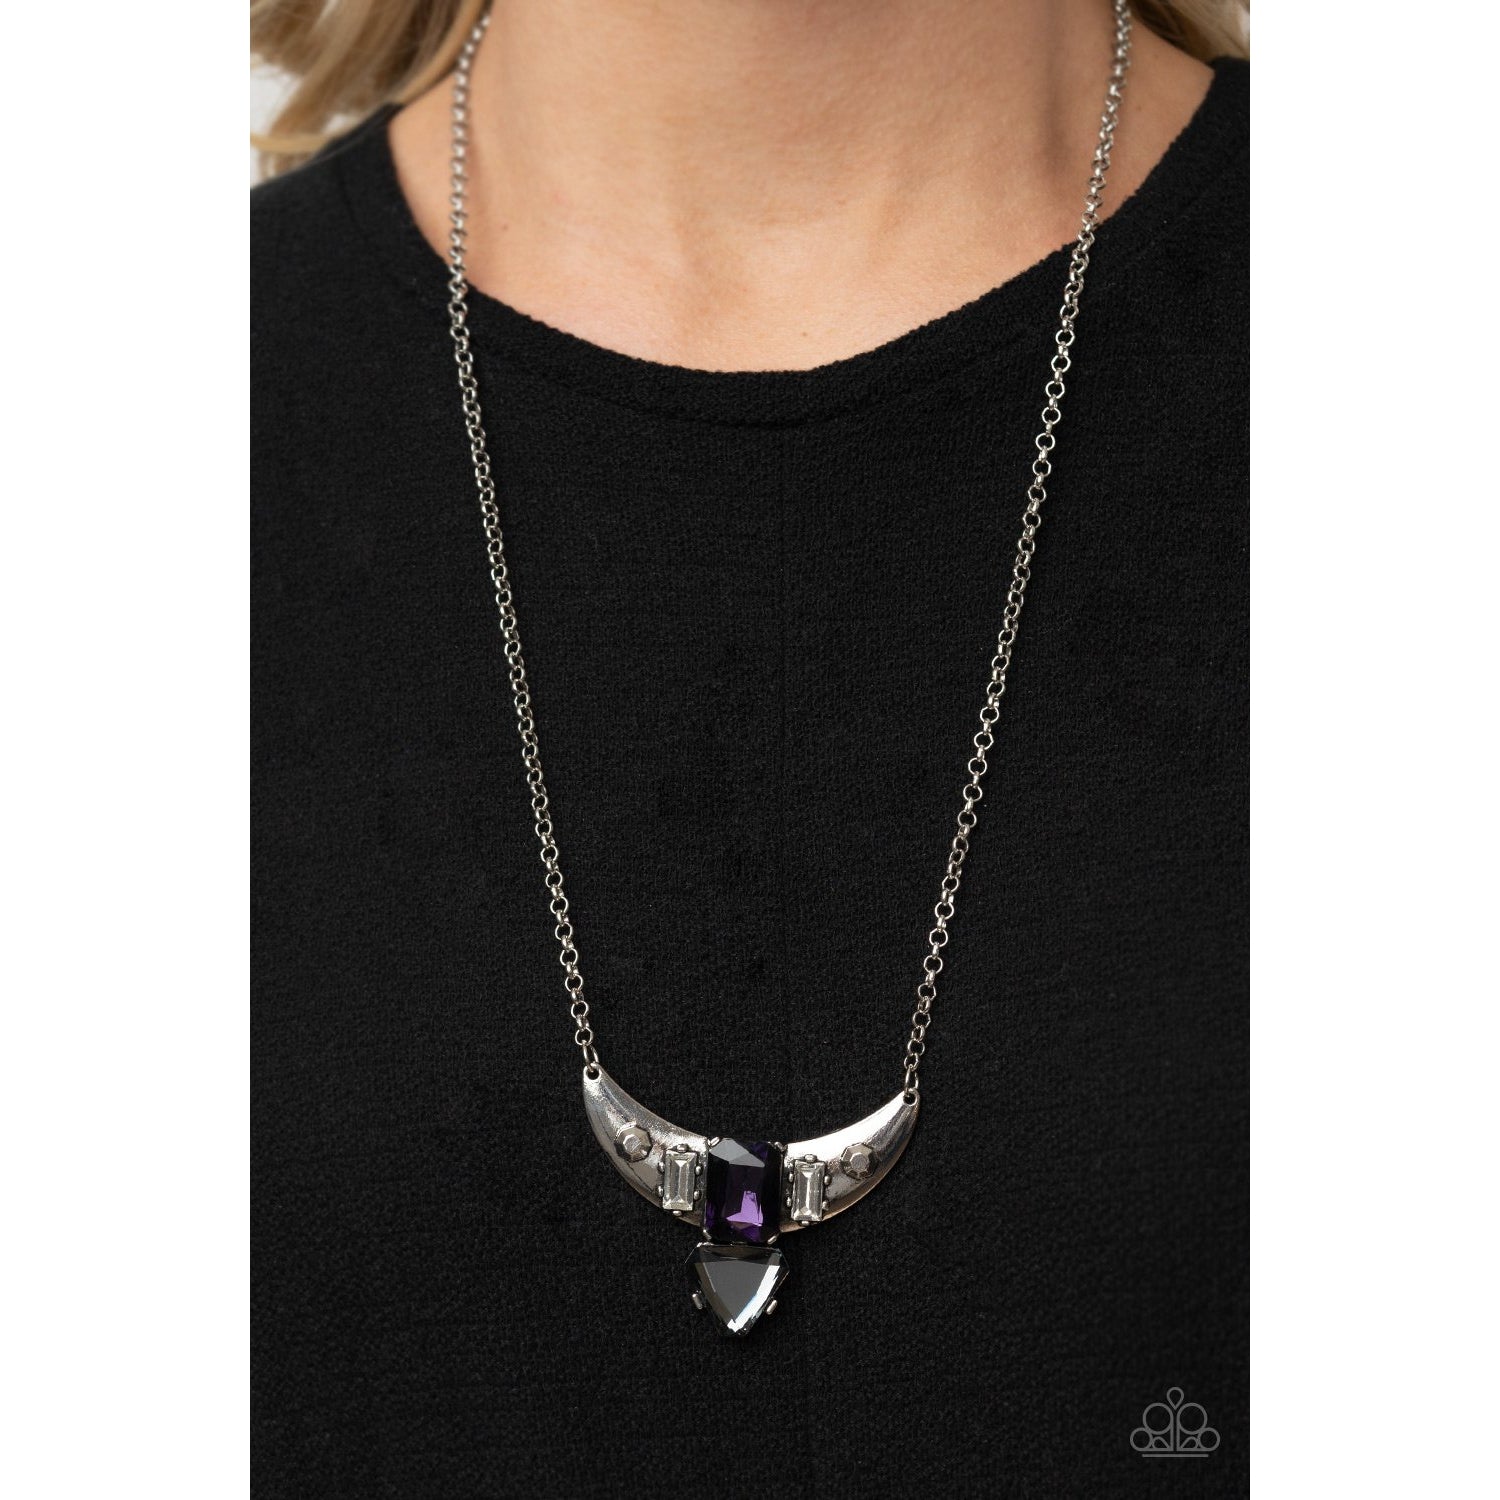 You the TALISMAN! - Purple Necklace - Paparazzi Accessories - GlaMarous Titi Jewels